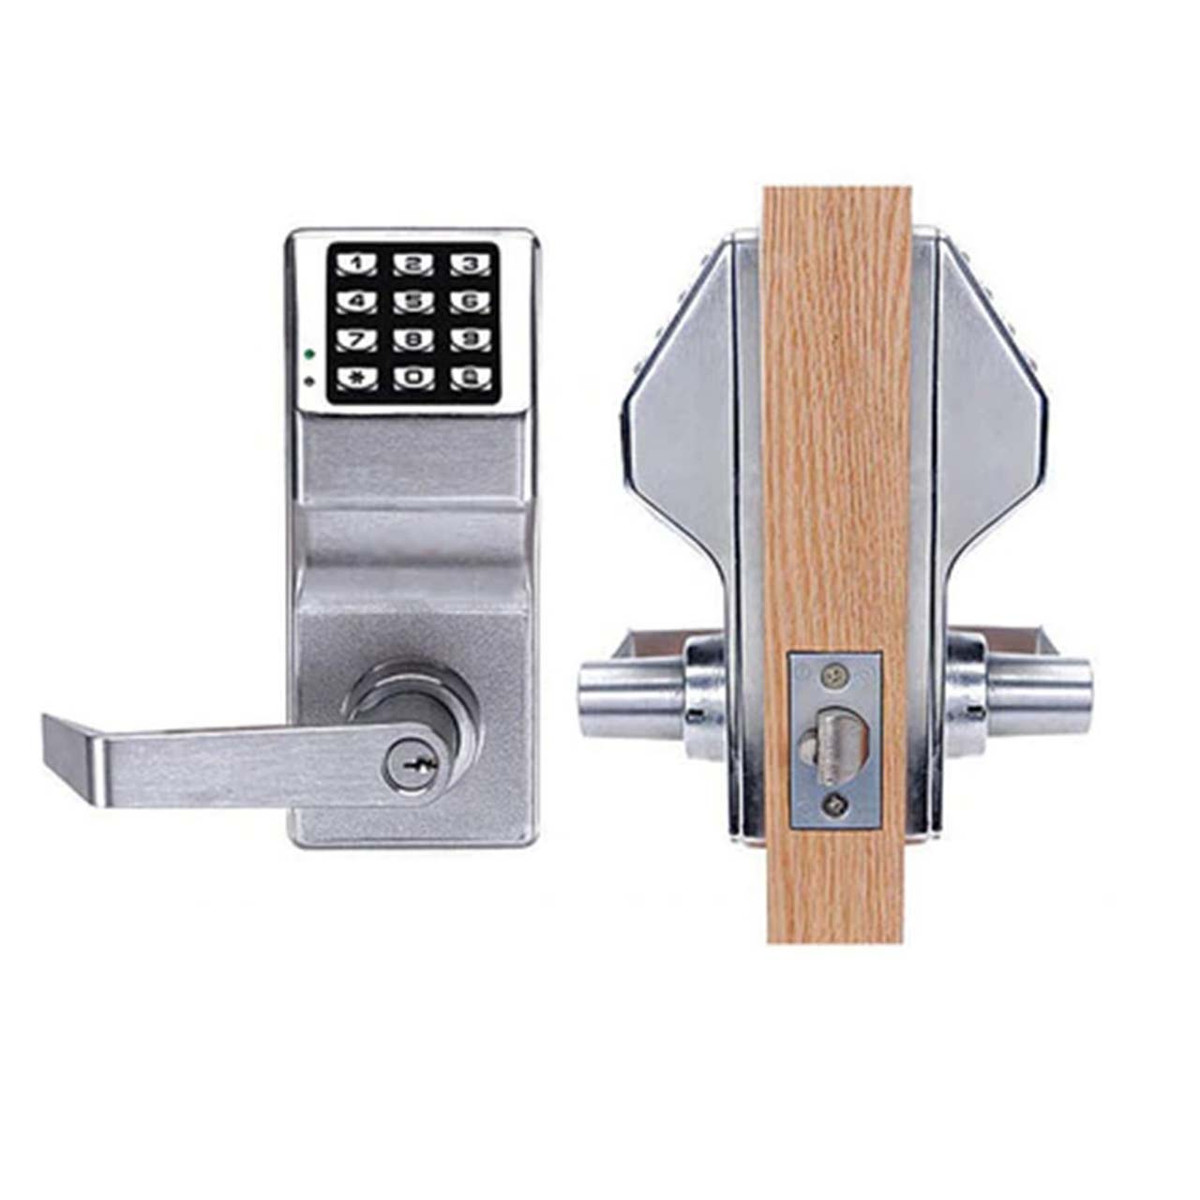 Alarm Lock DL5200-26D, Trilogy T2 Double Sided Cylindrical Electronic Digital Keypad Lock, Satin Chrome